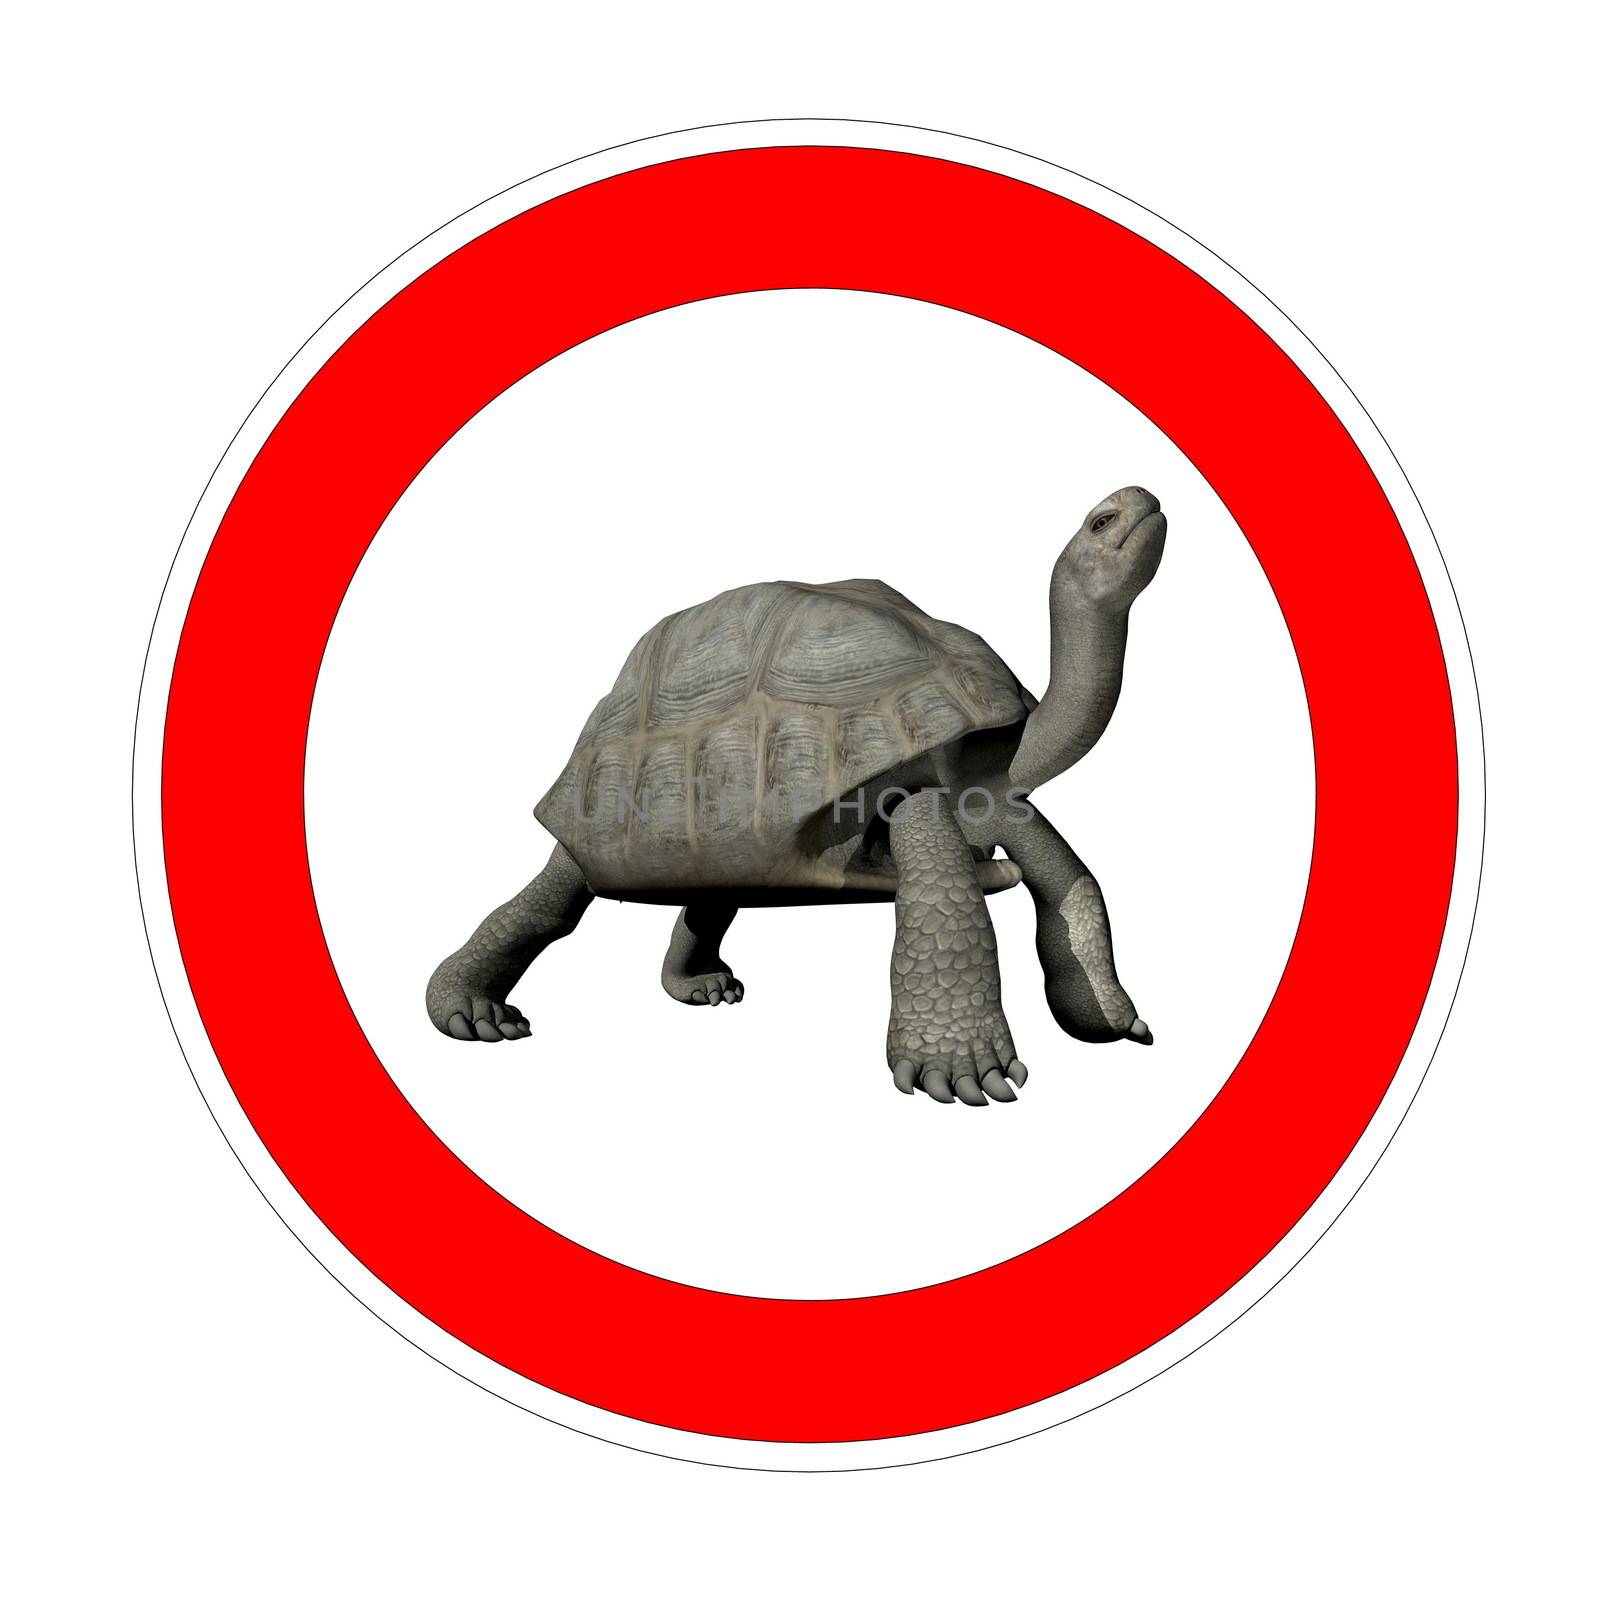 Turtle speed limit by Elenaphotos21